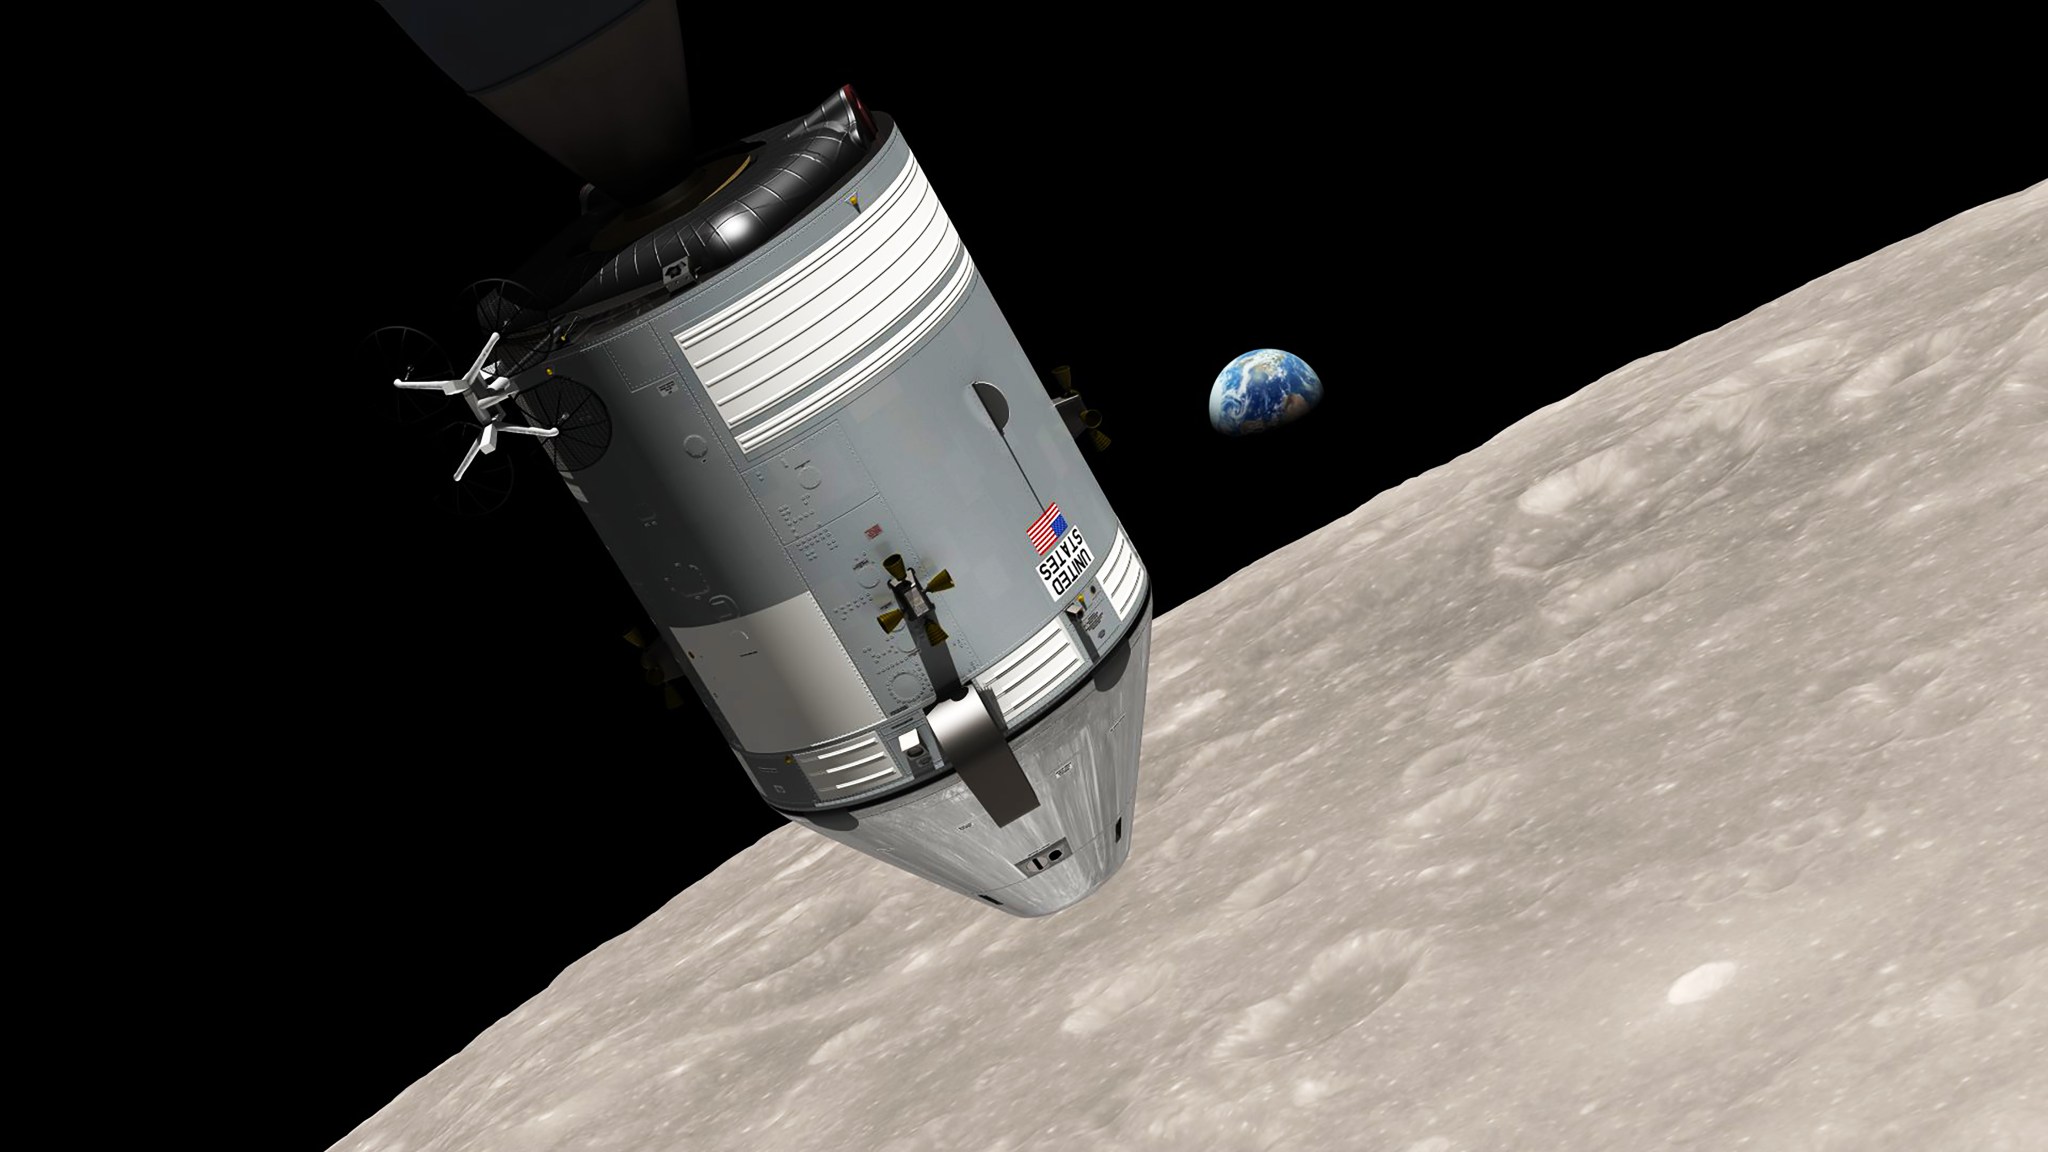 Apollo 8 spacecraft in orbit around the Moon